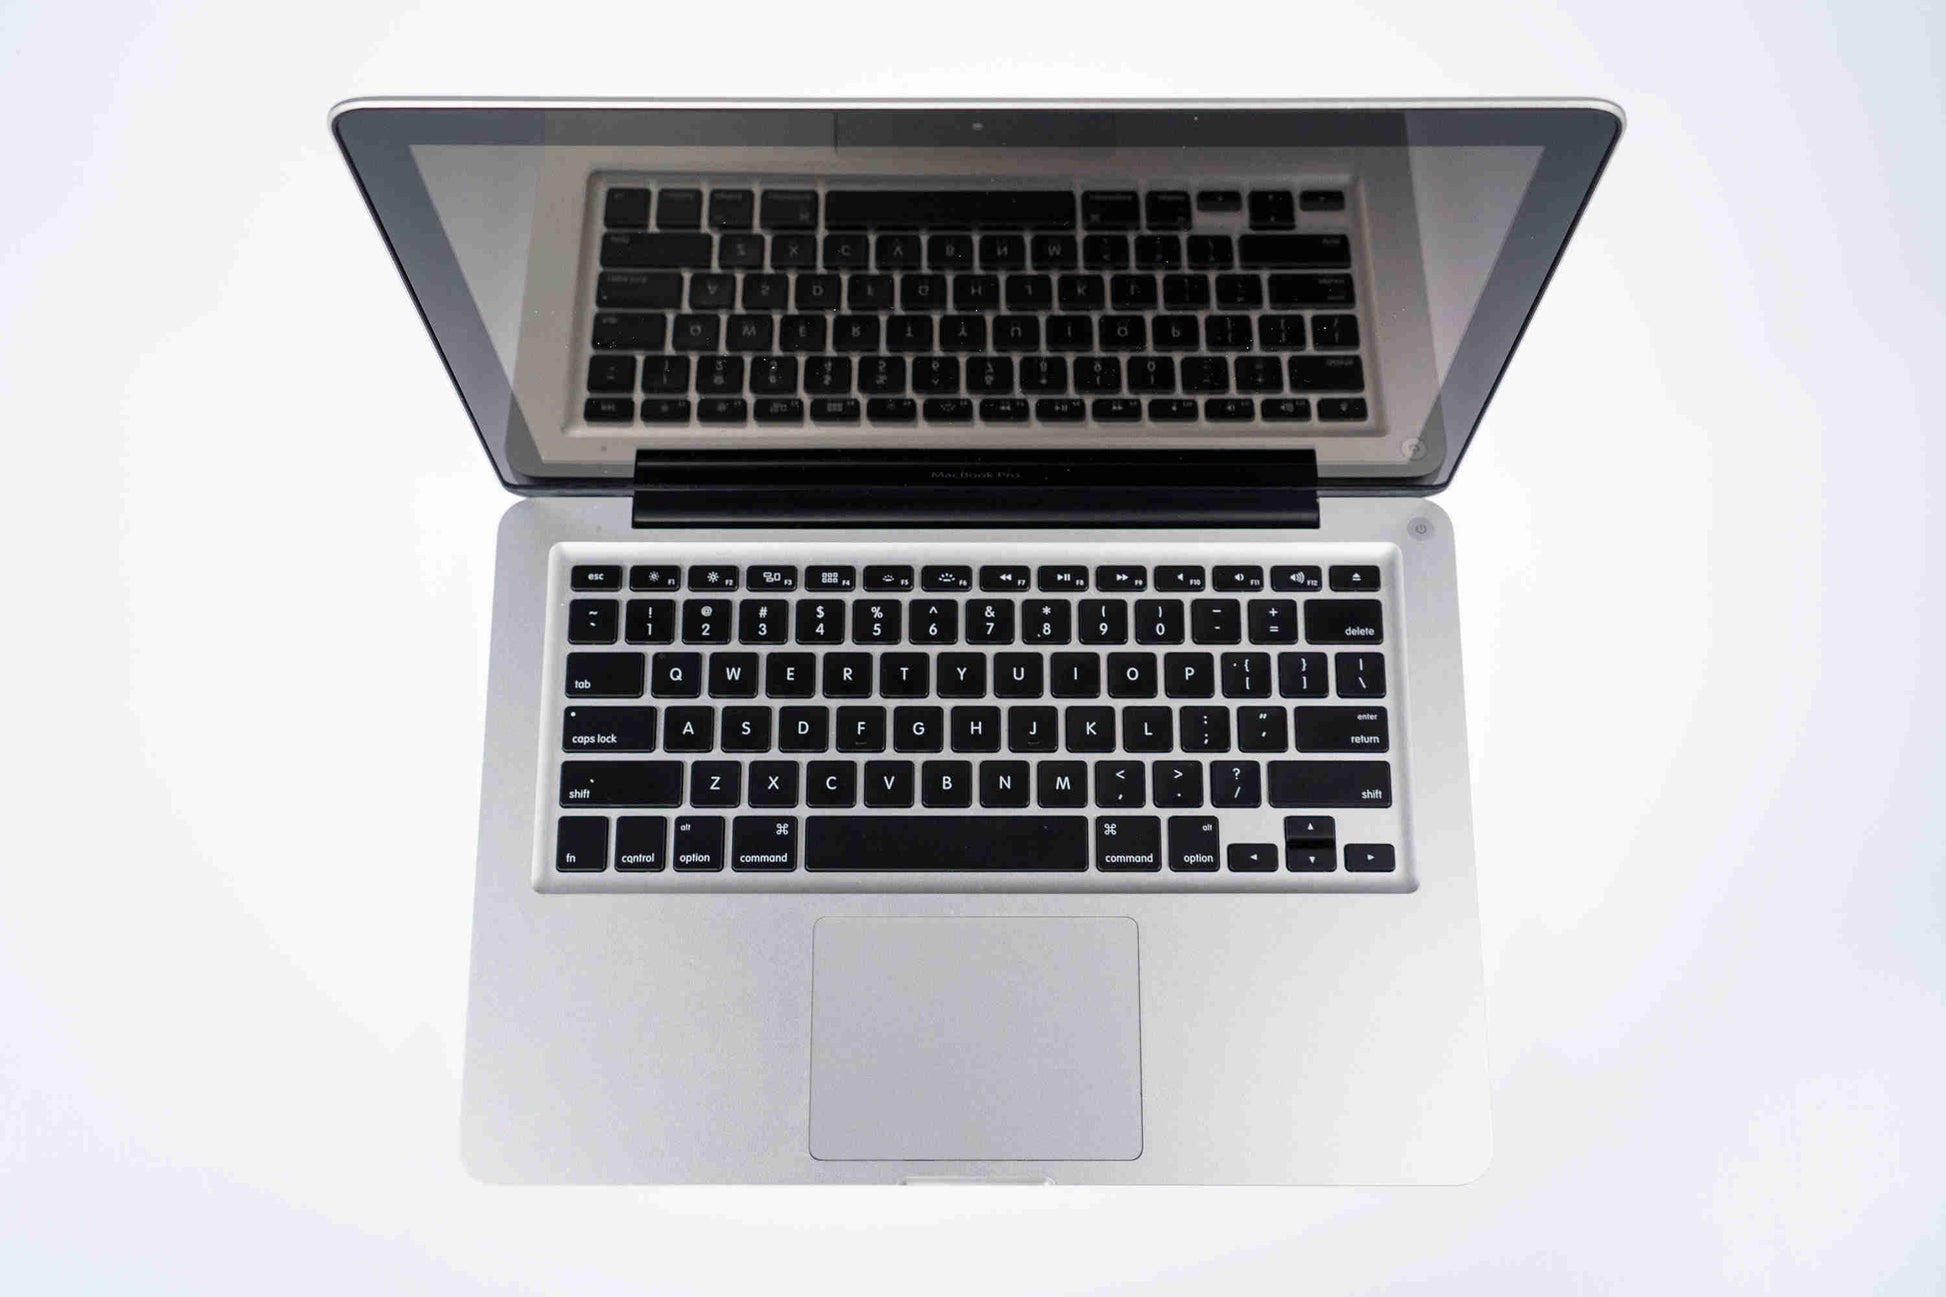 Apple MacBook Pro (13-inch Mid 2012) 2.5 GHz I5-3210M 8GB 256GB SSD (Silver)